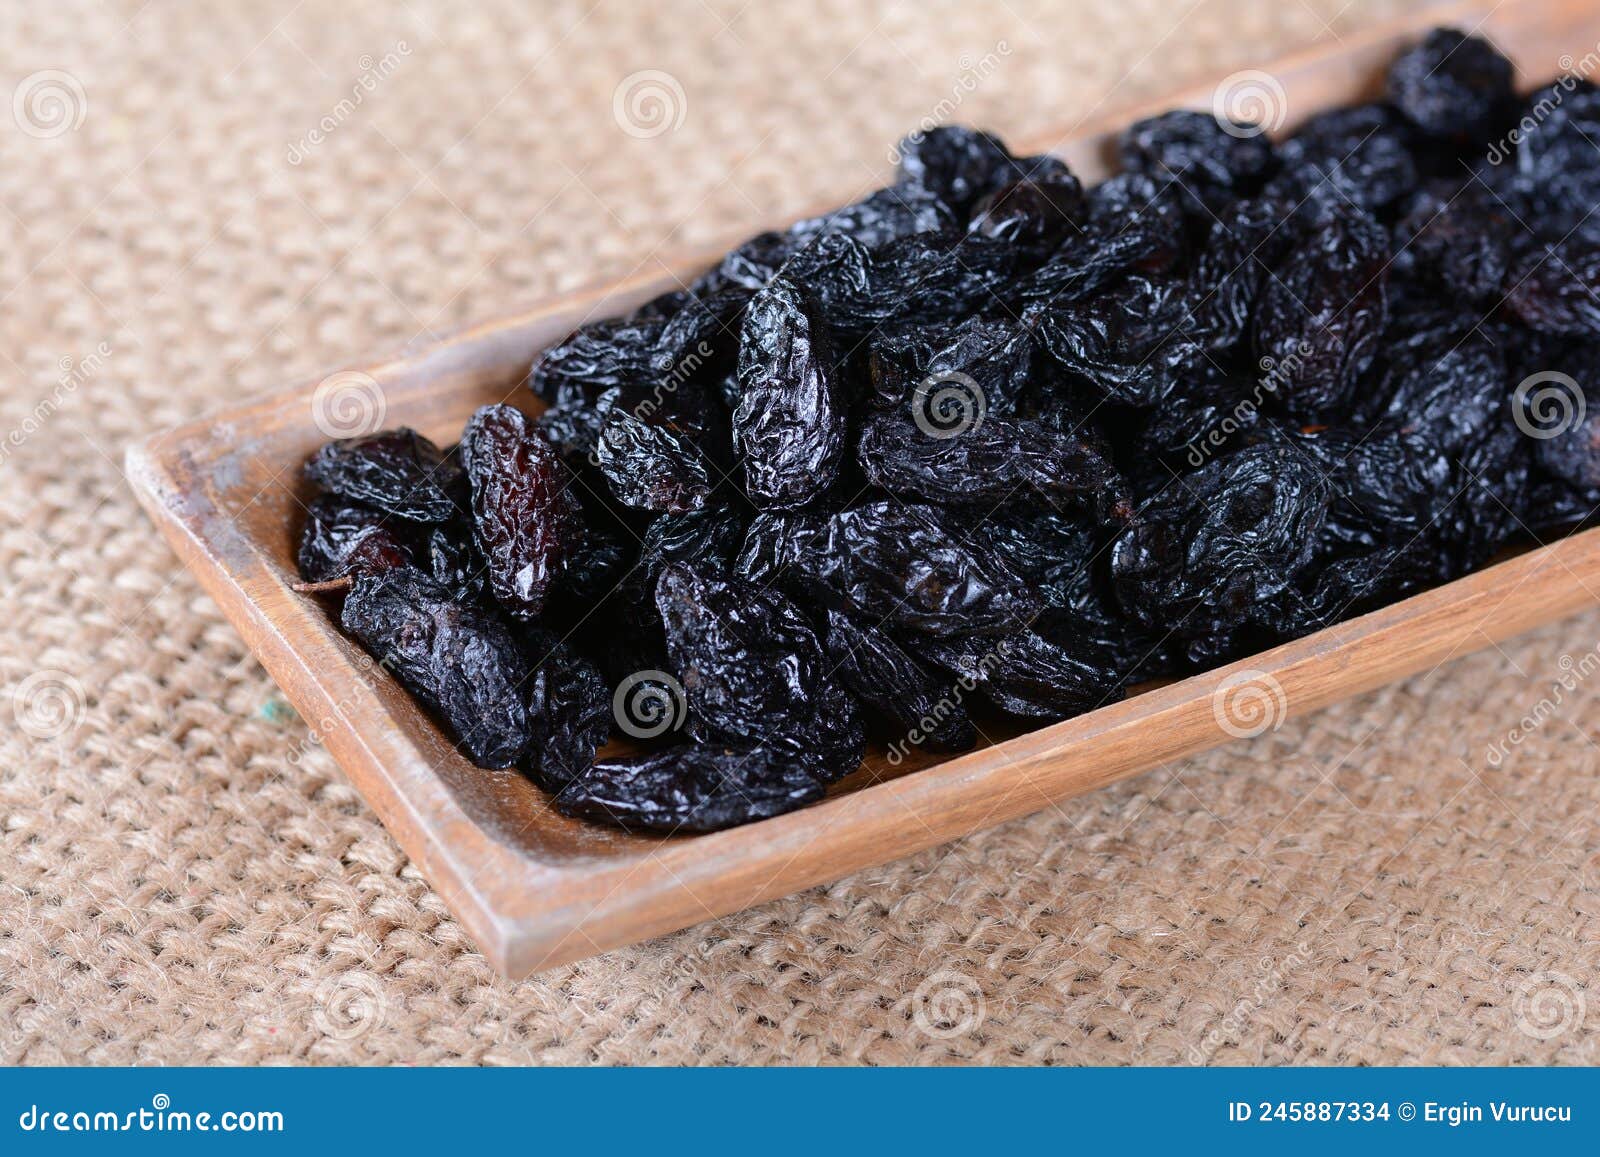 black grapes, black grapes, grapes